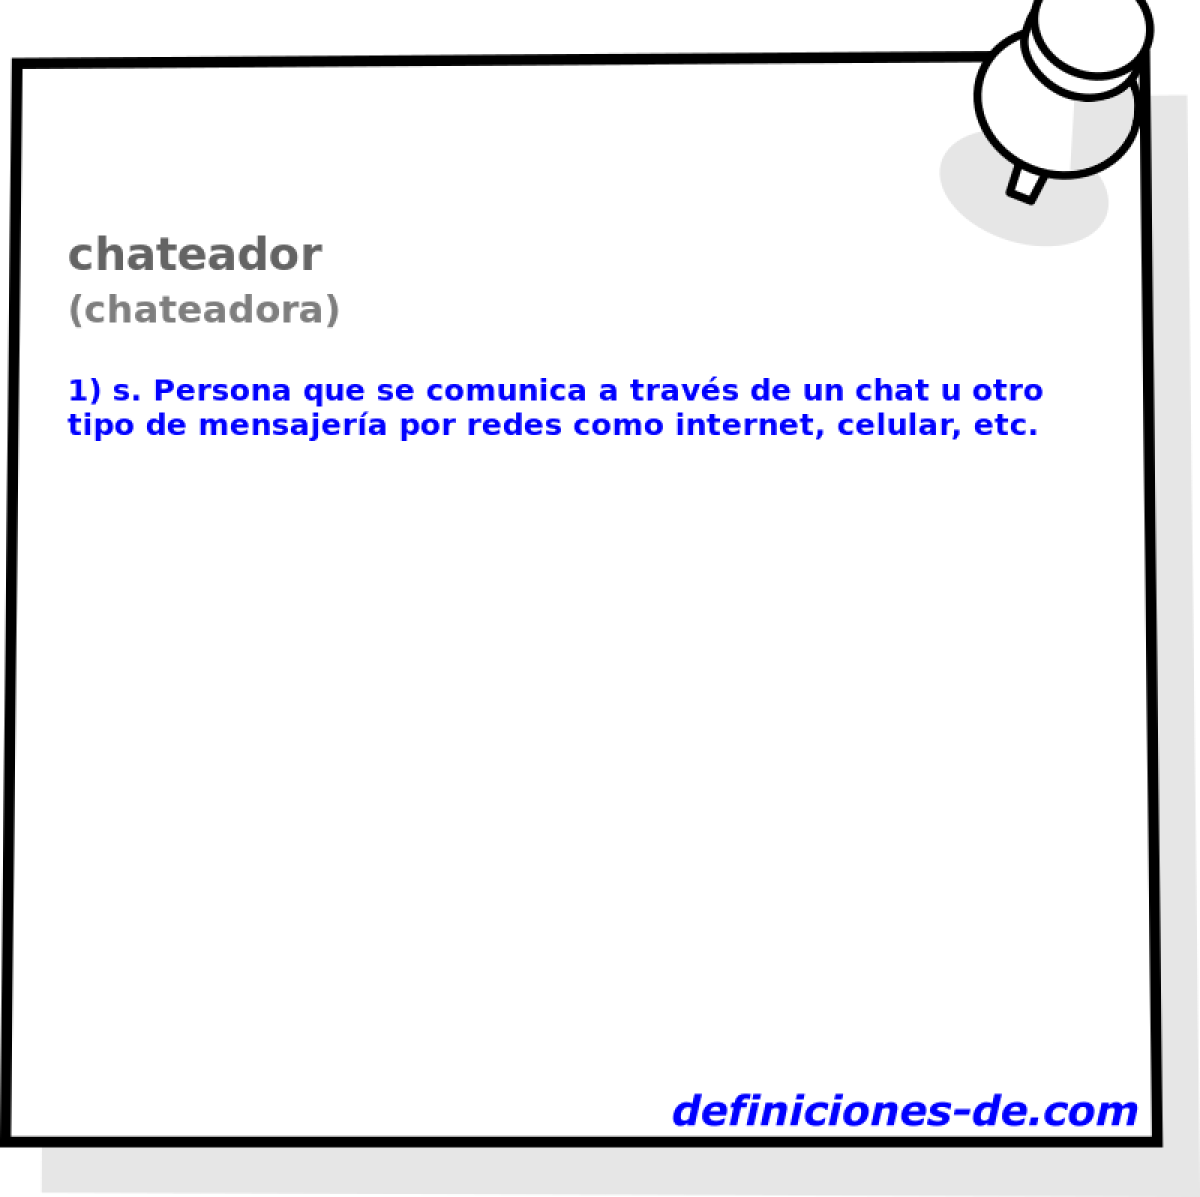 chateador (chateadora)